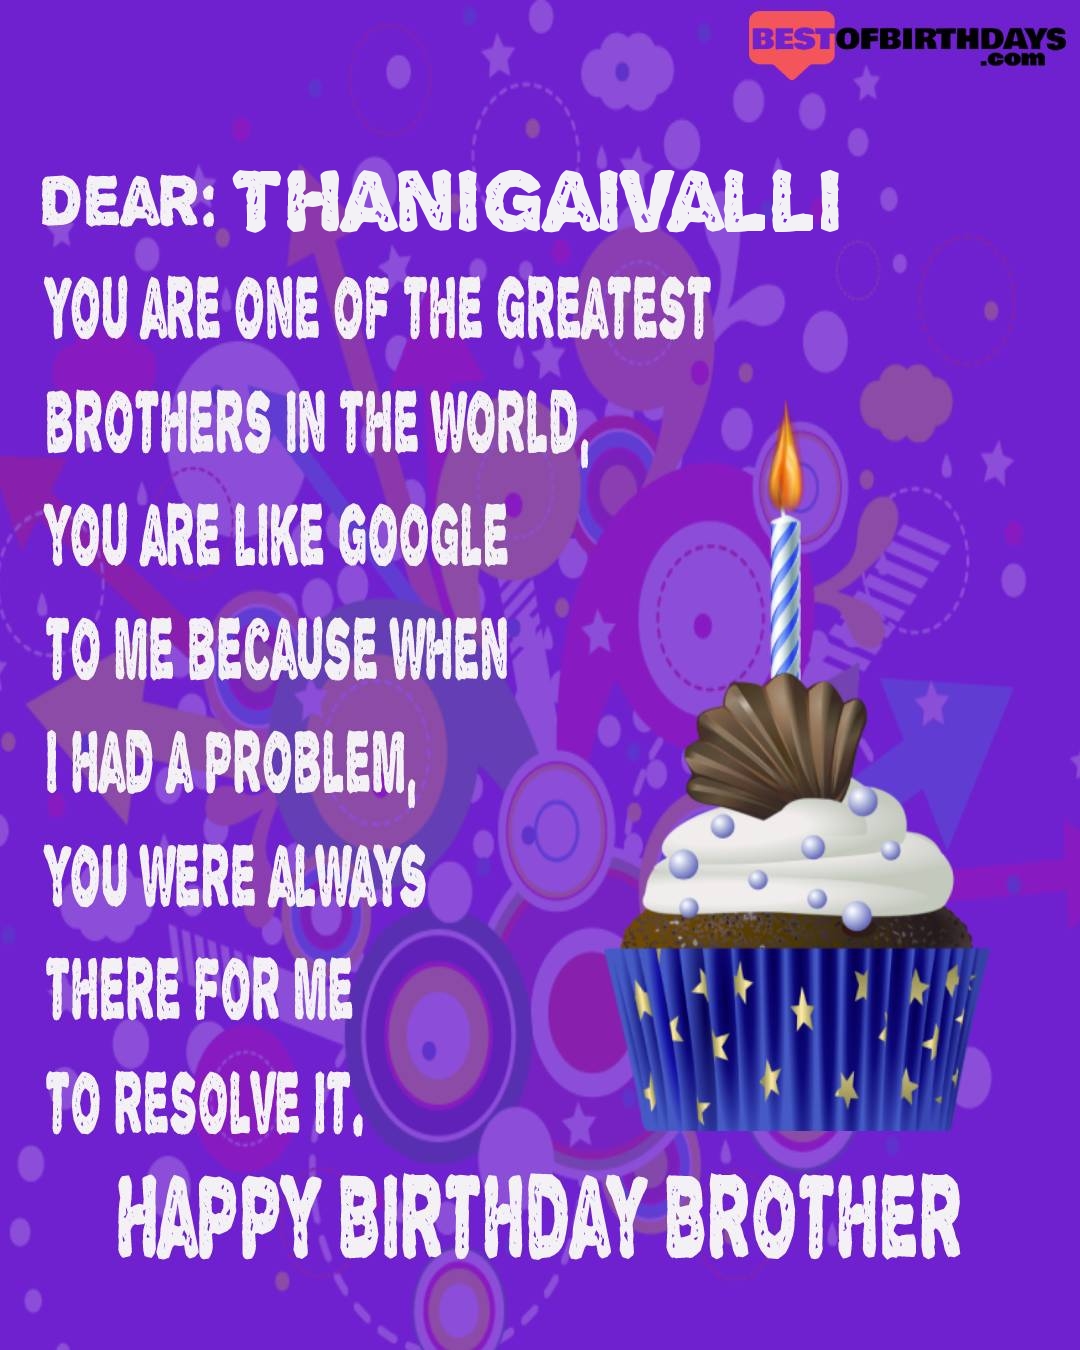 Happy birthday thanigaivalli bhai brother bro